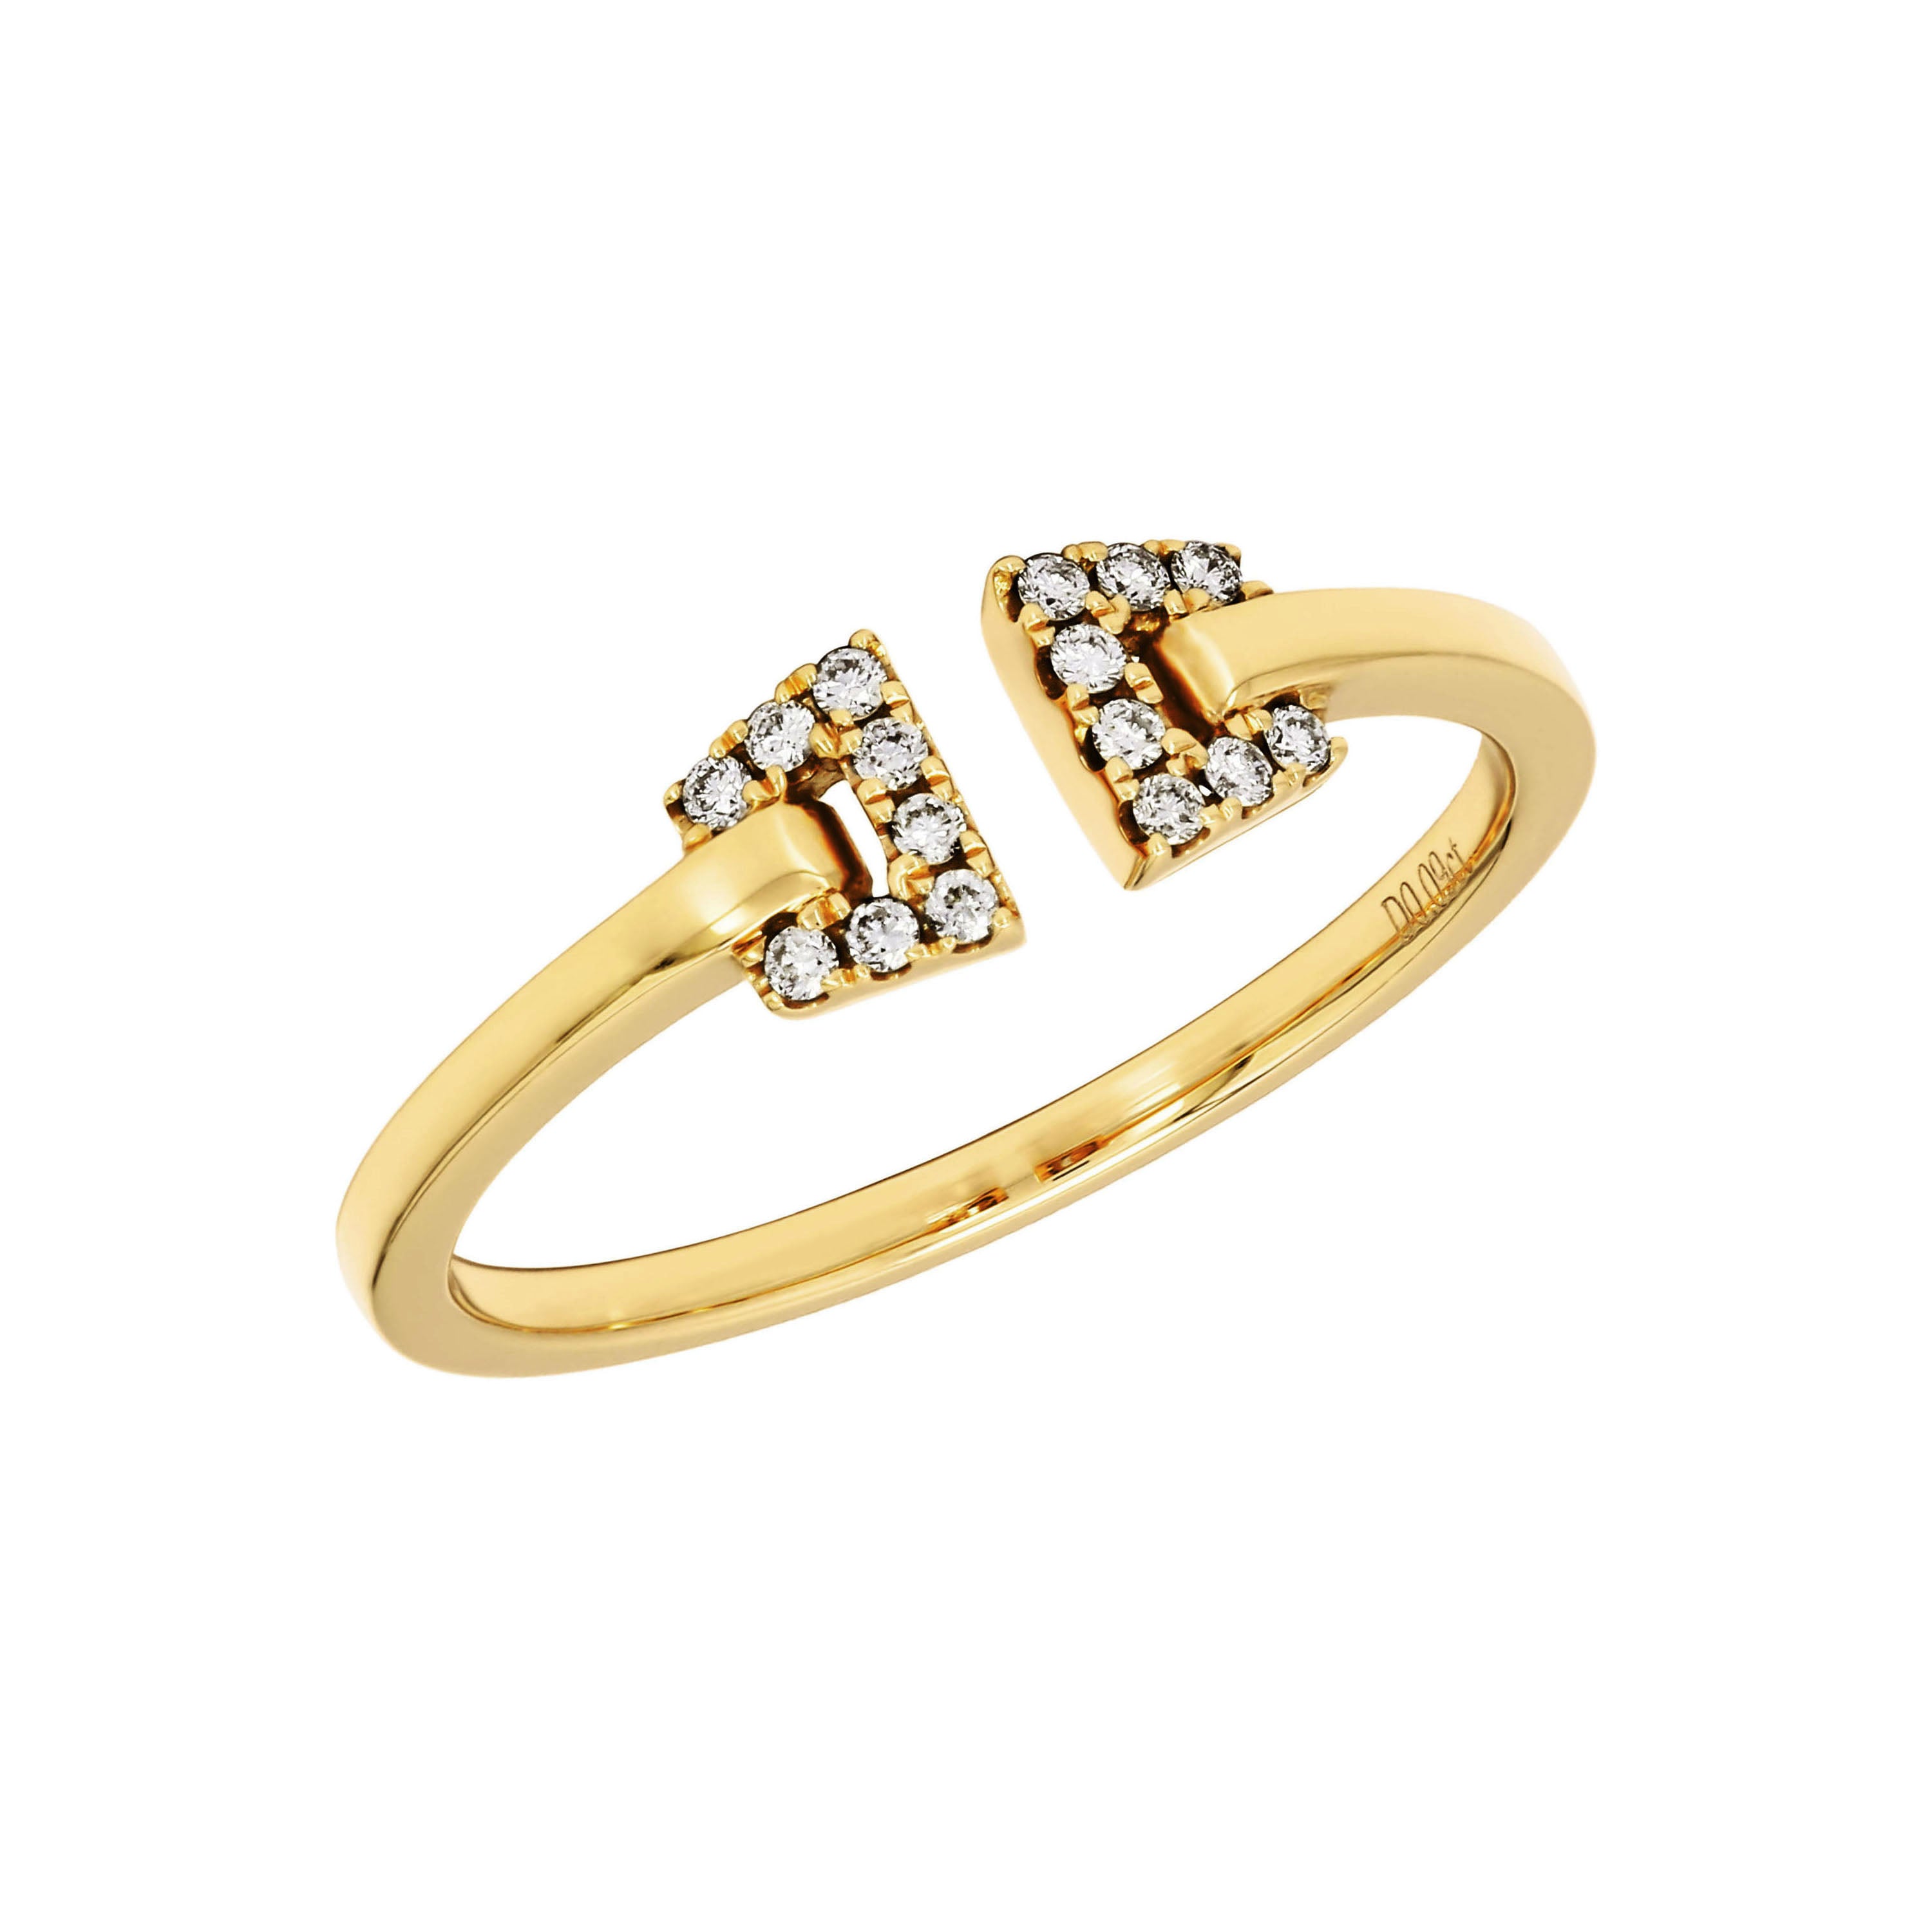 Adamar Jewels Stirrups Ring in 18K yellow gold set with diamonds